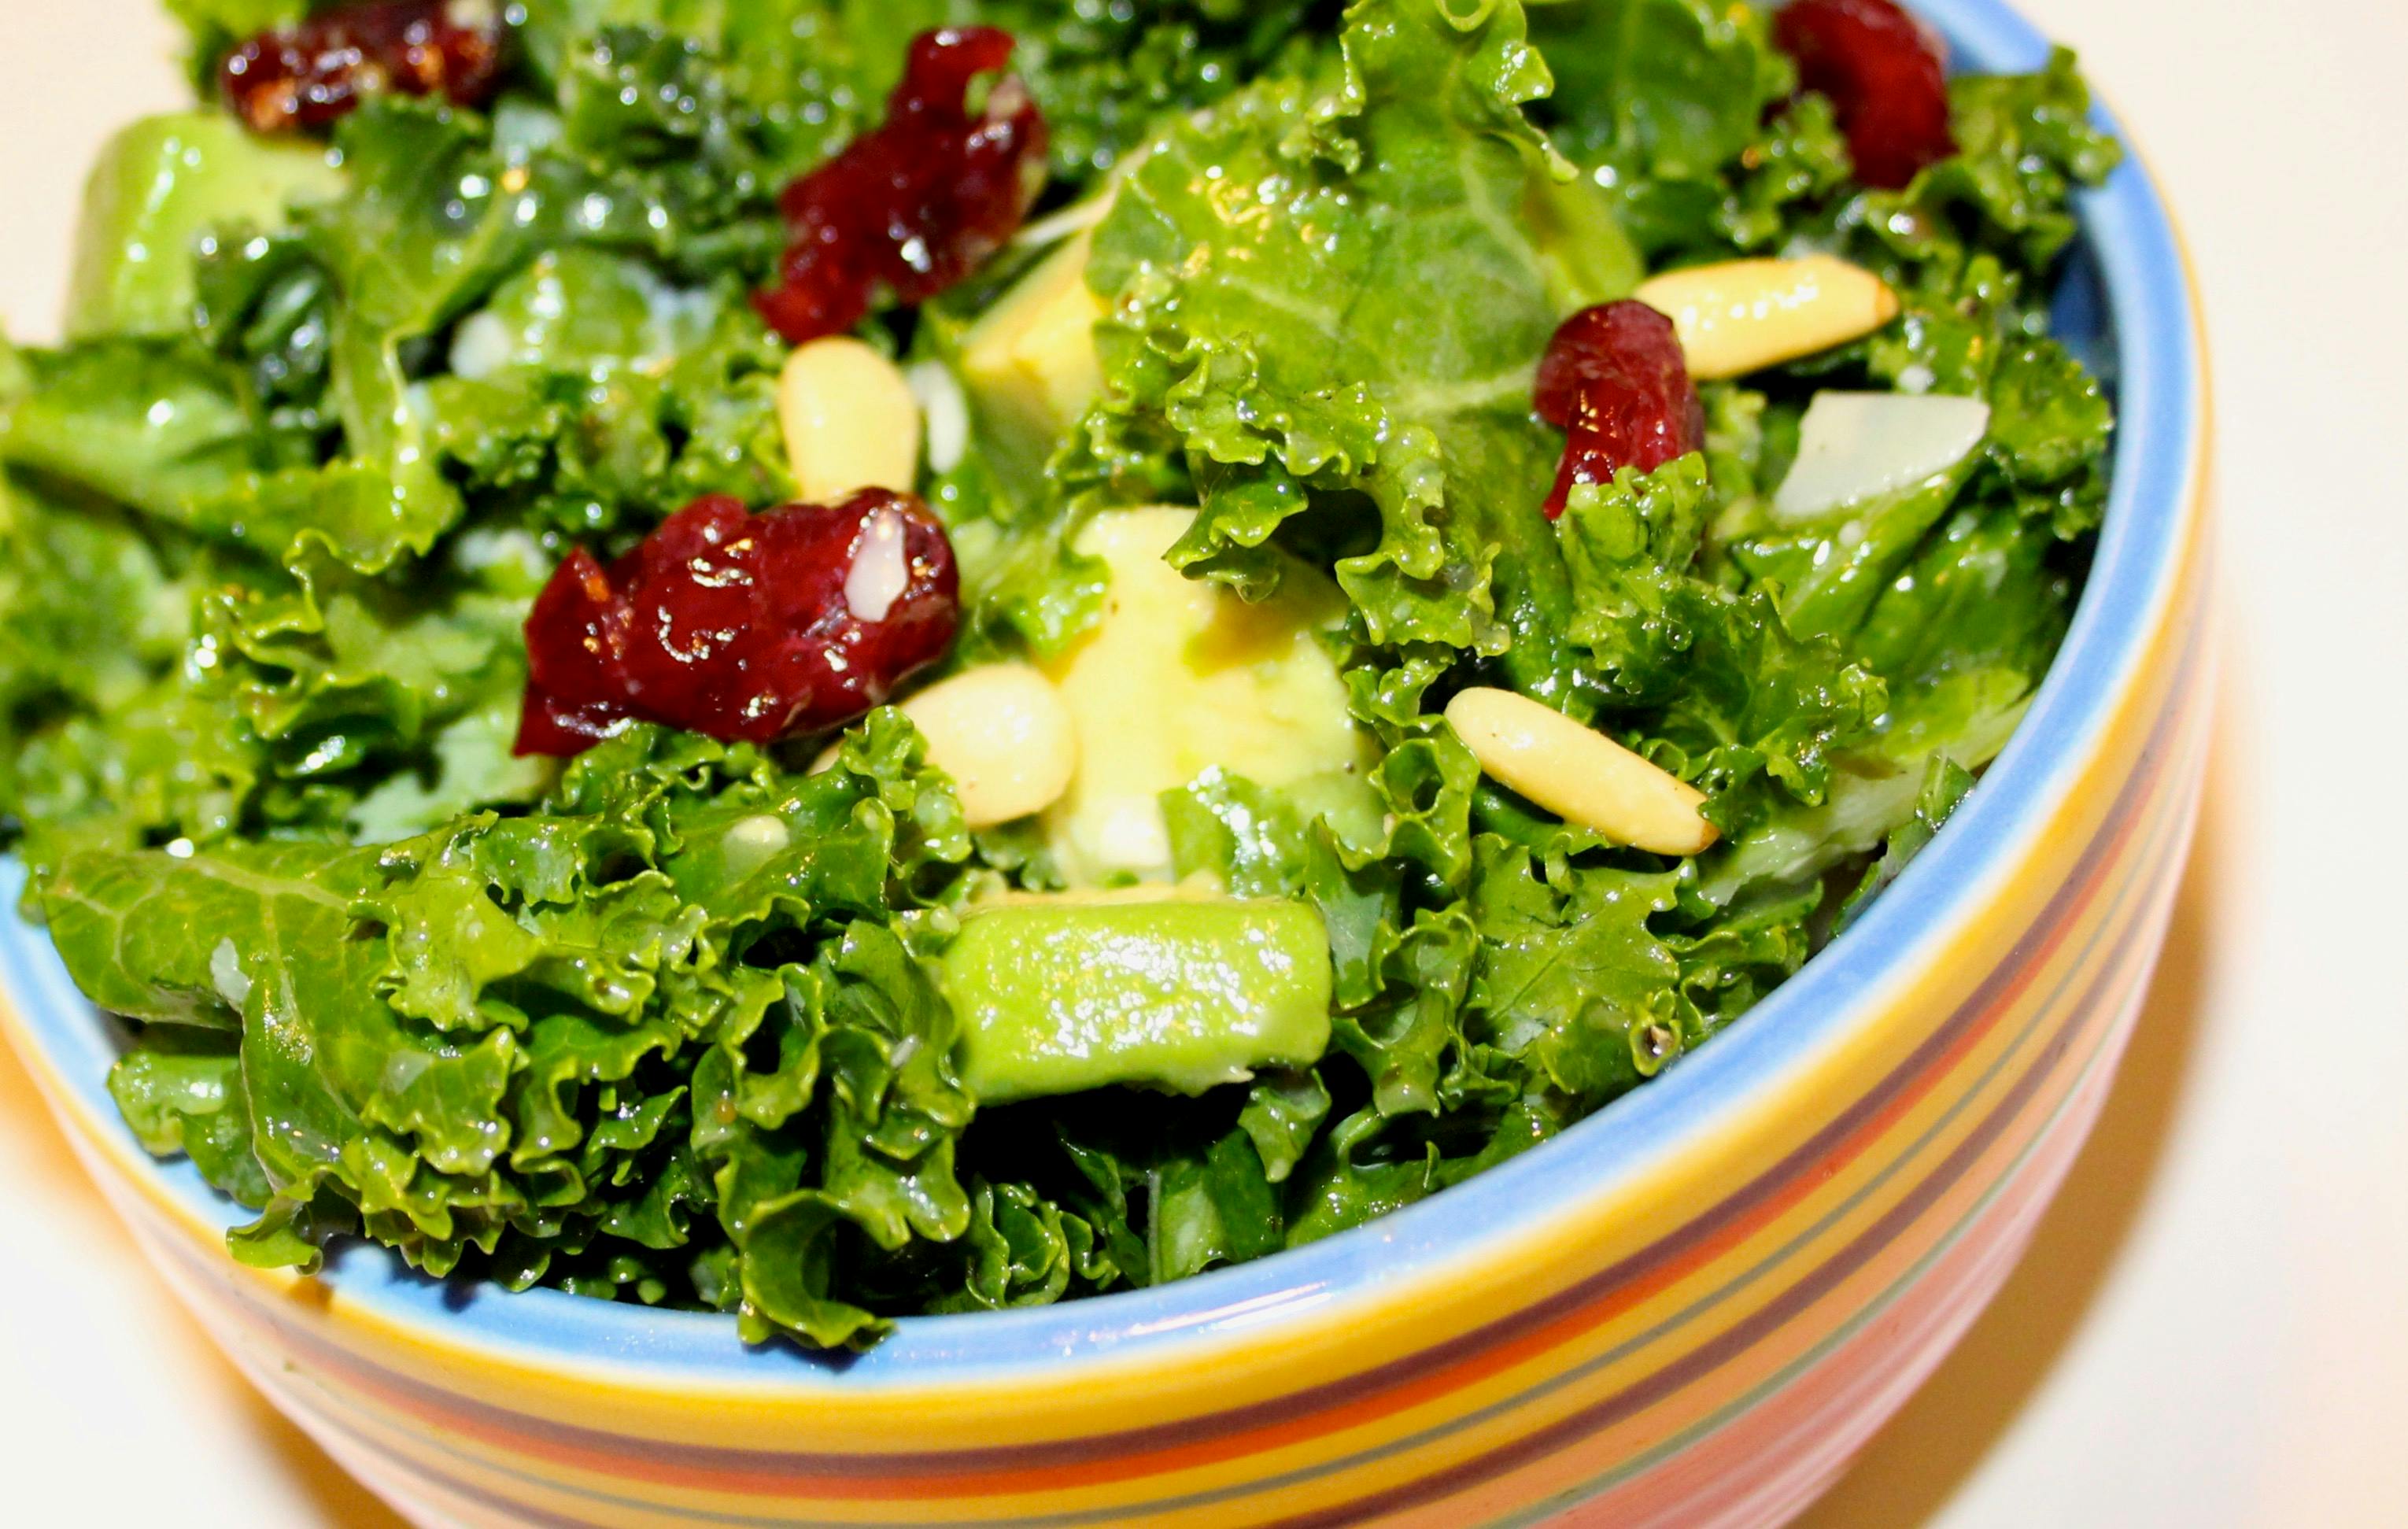 Free stock photo of Kale salad